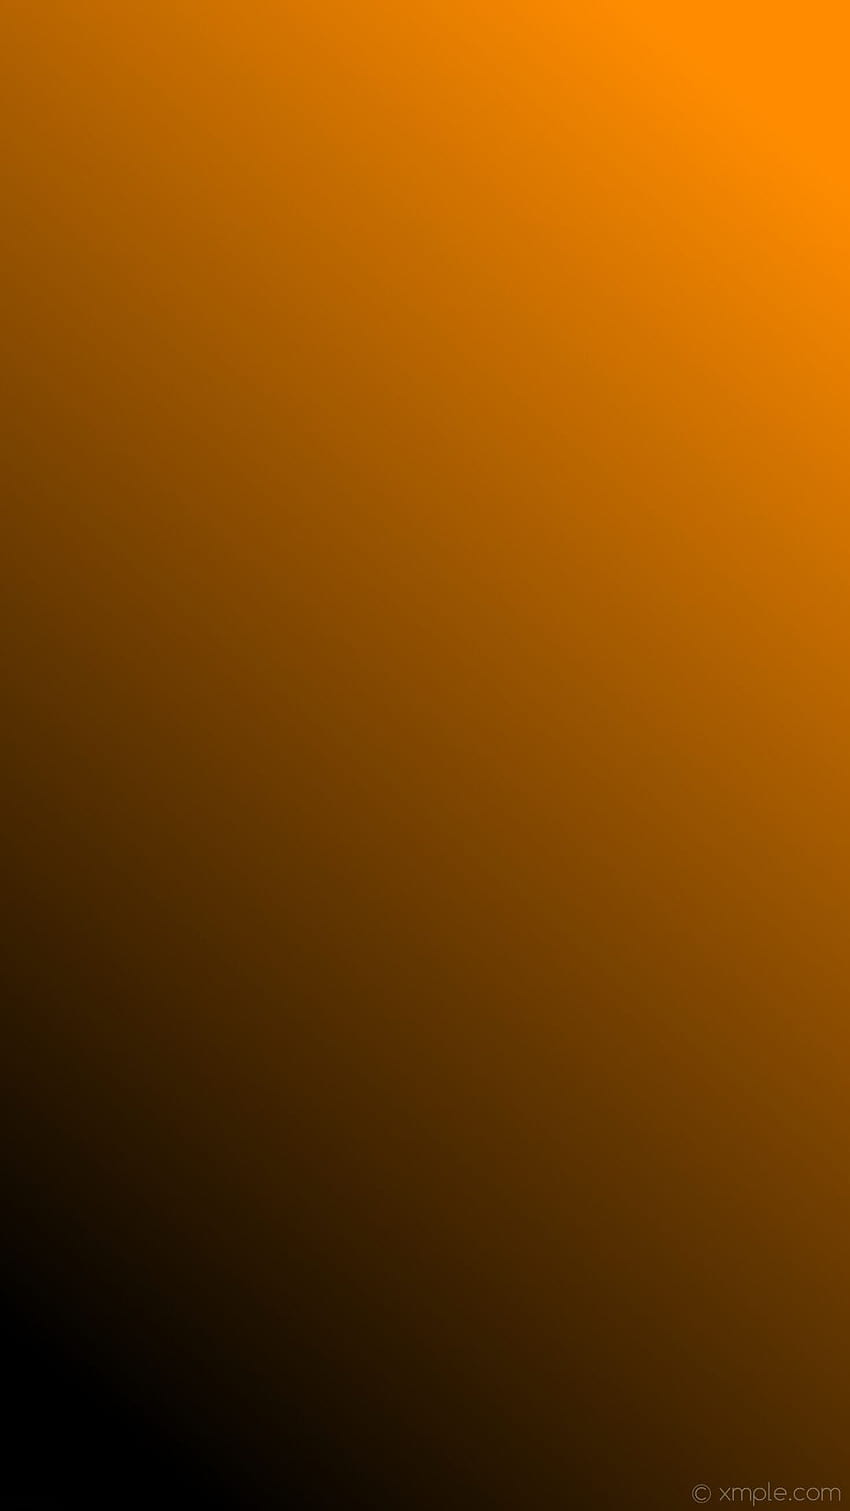 Gradien Oranye Hitam Linear Oranye Tua - Abu-abu Tua Dan Oranye - -, Gradien Coklat Tua wallpaper ponsel HD